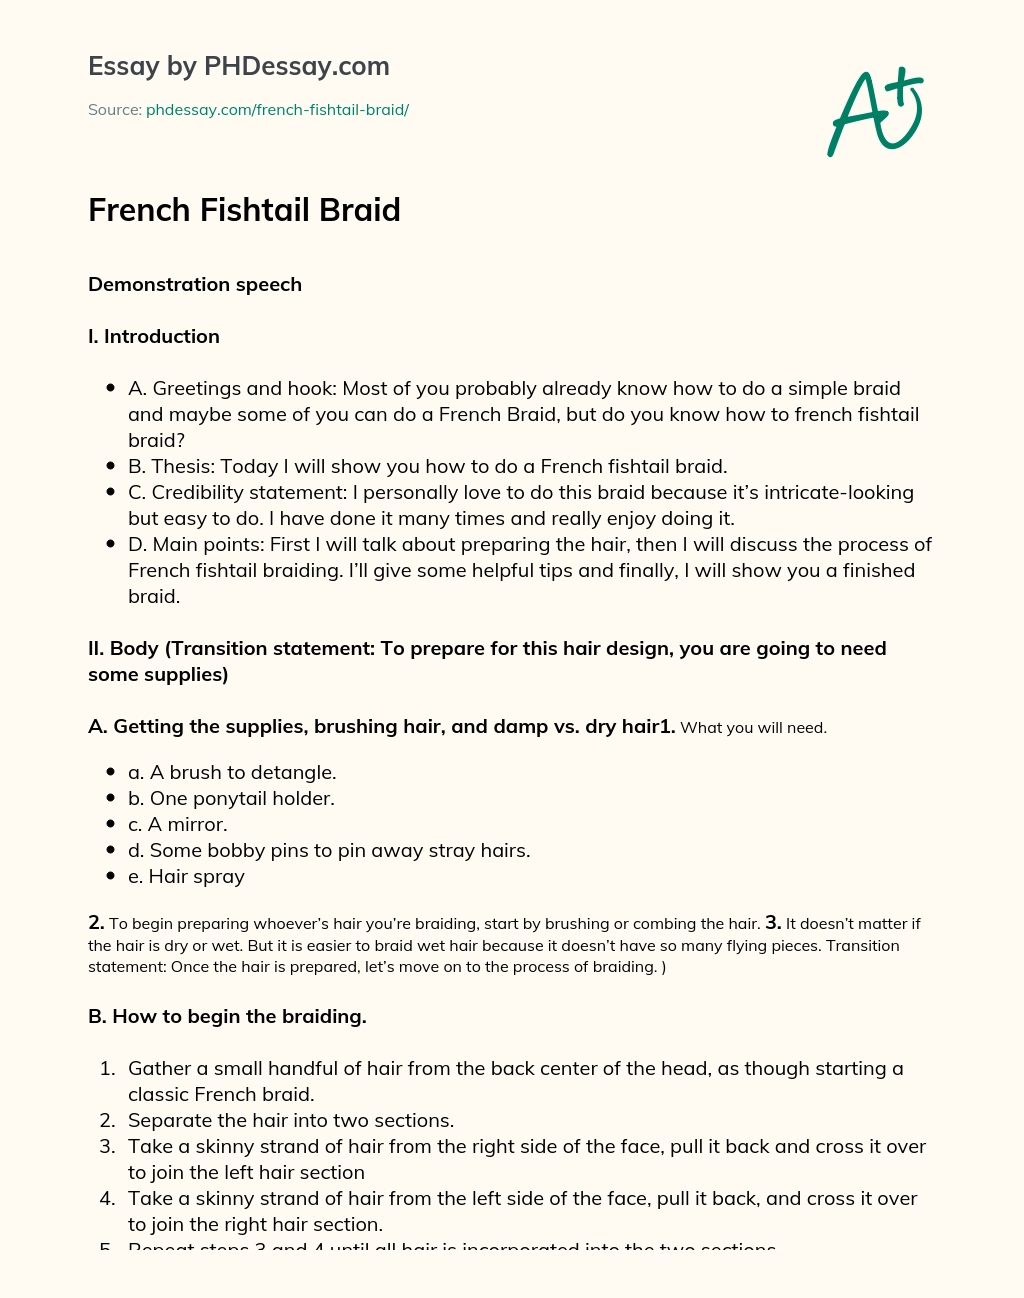 French Fishtail Braid essay